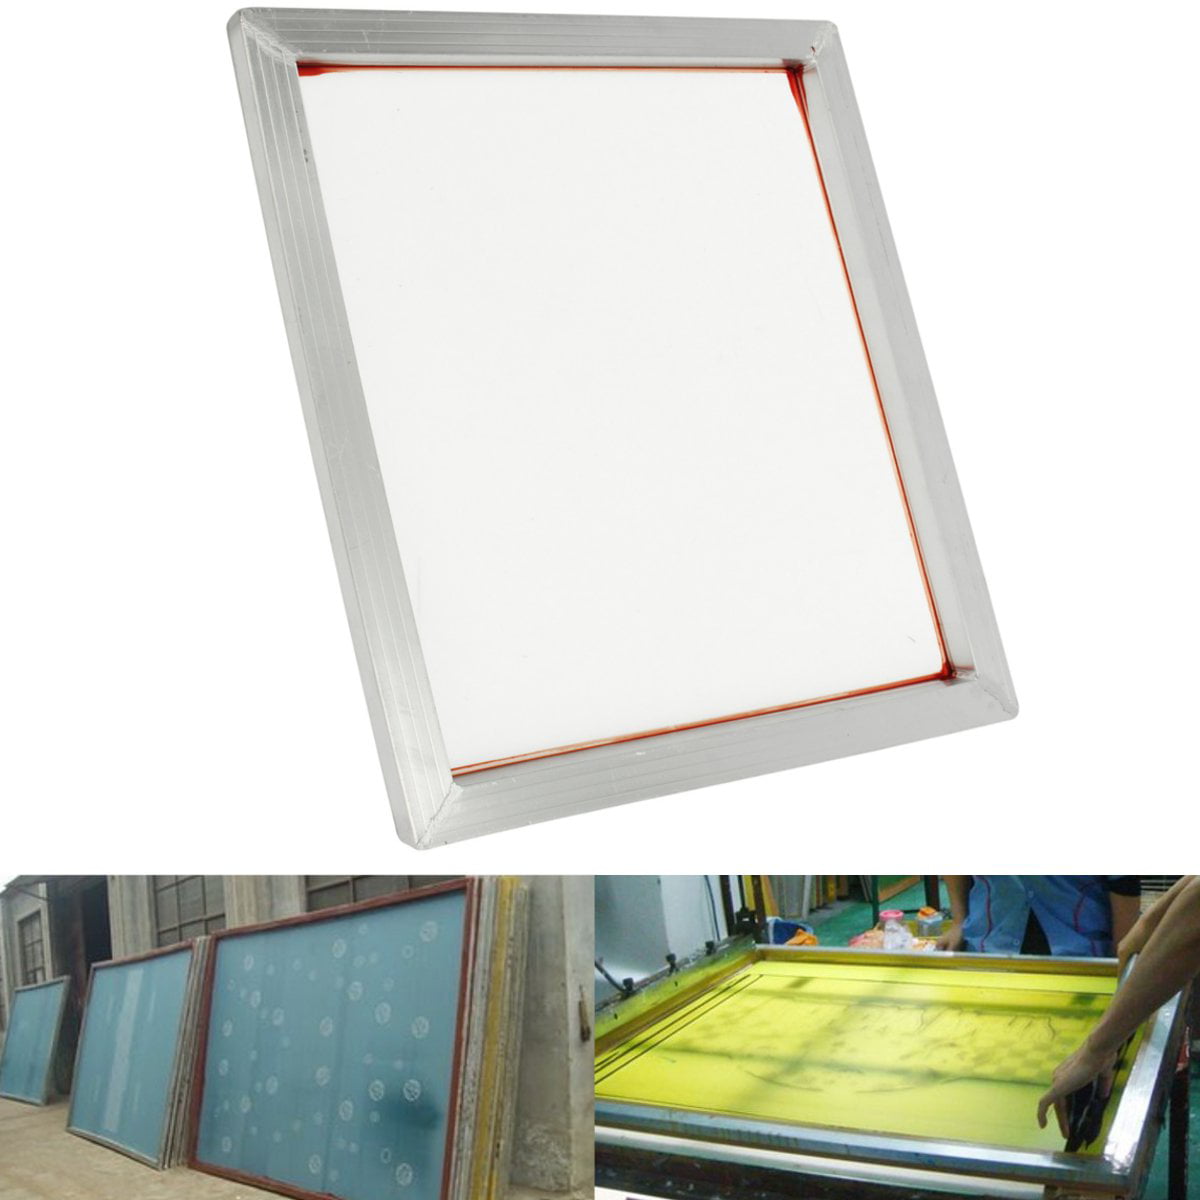 24"x20" Aluminum Silk Screen Printing Press Screens Frame with 110 Mesh Count 